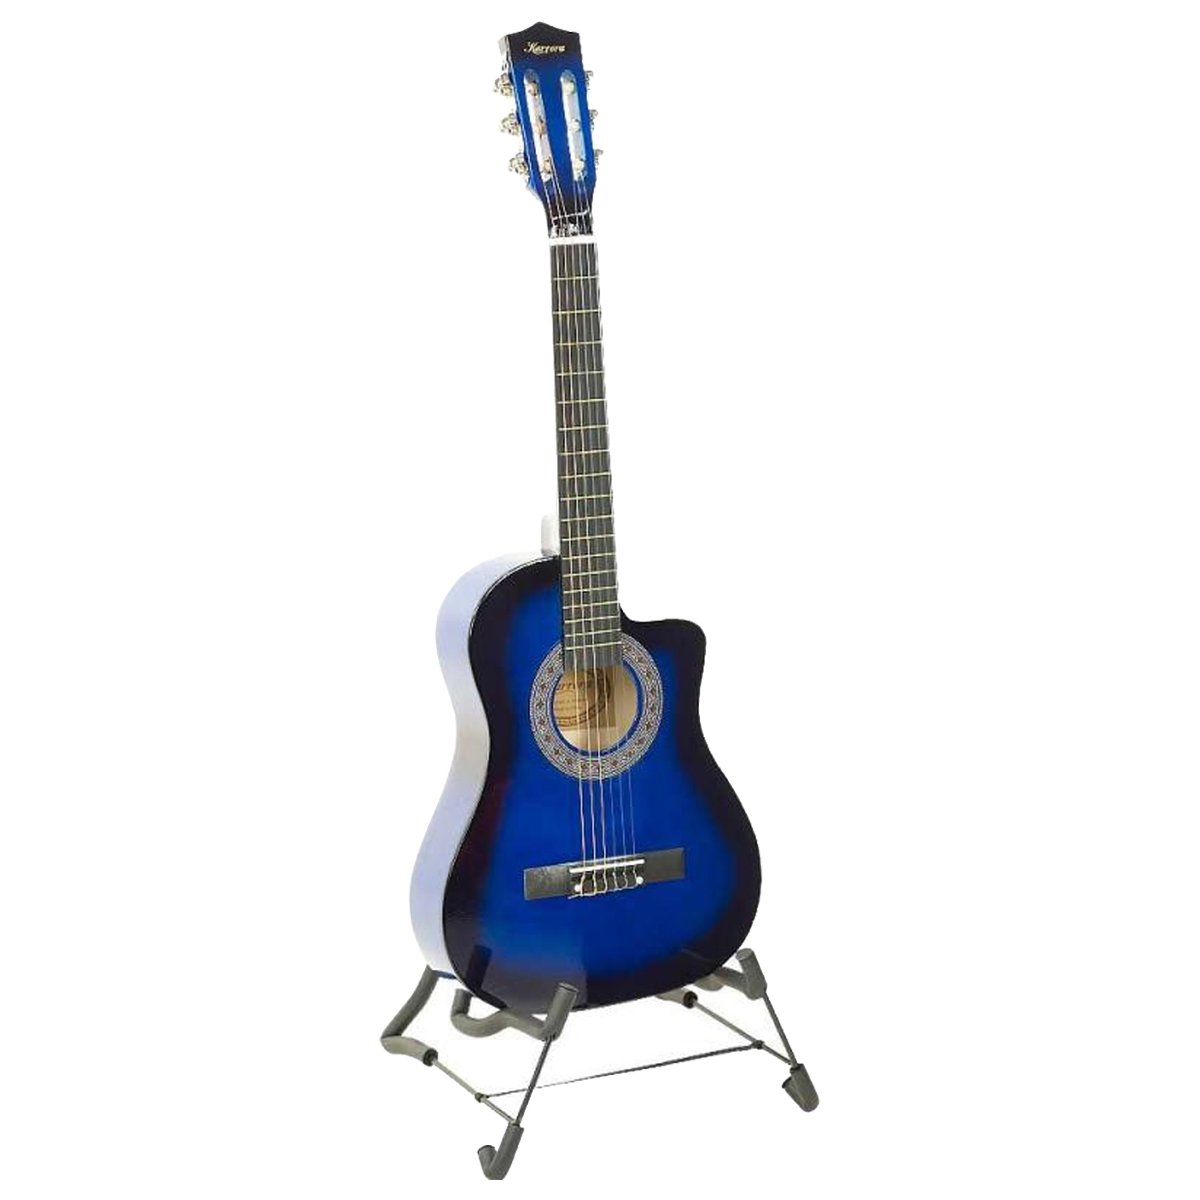 Karrera 38in Pro Cutaway Acoustic Guitar with Bag Strings - Blue Burst 2